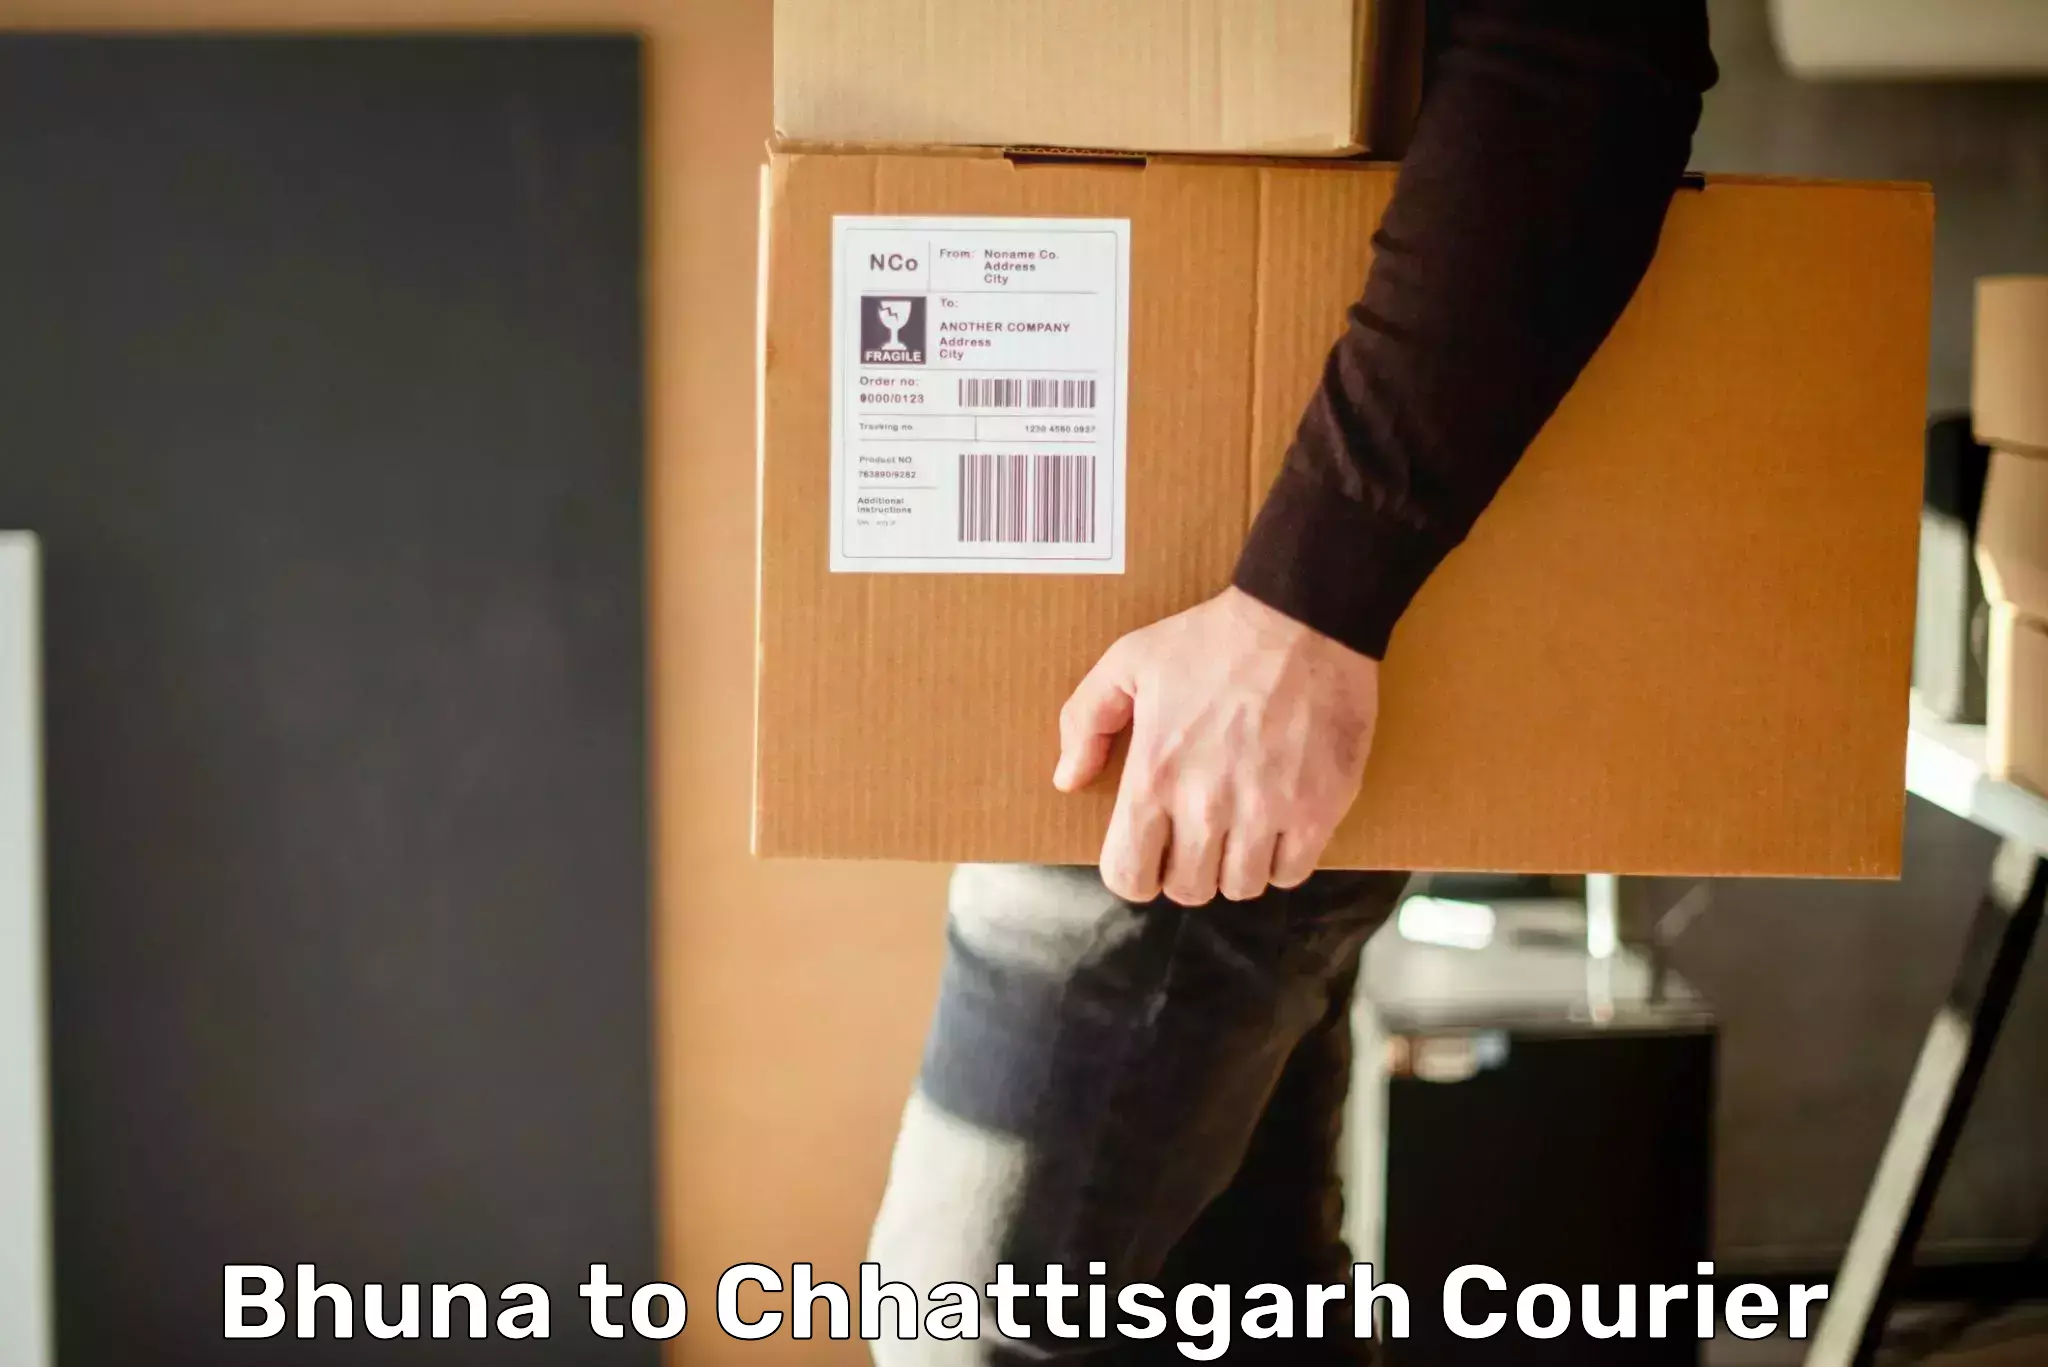 24/7 courier service Bhuna to Korea Chhattisgarh